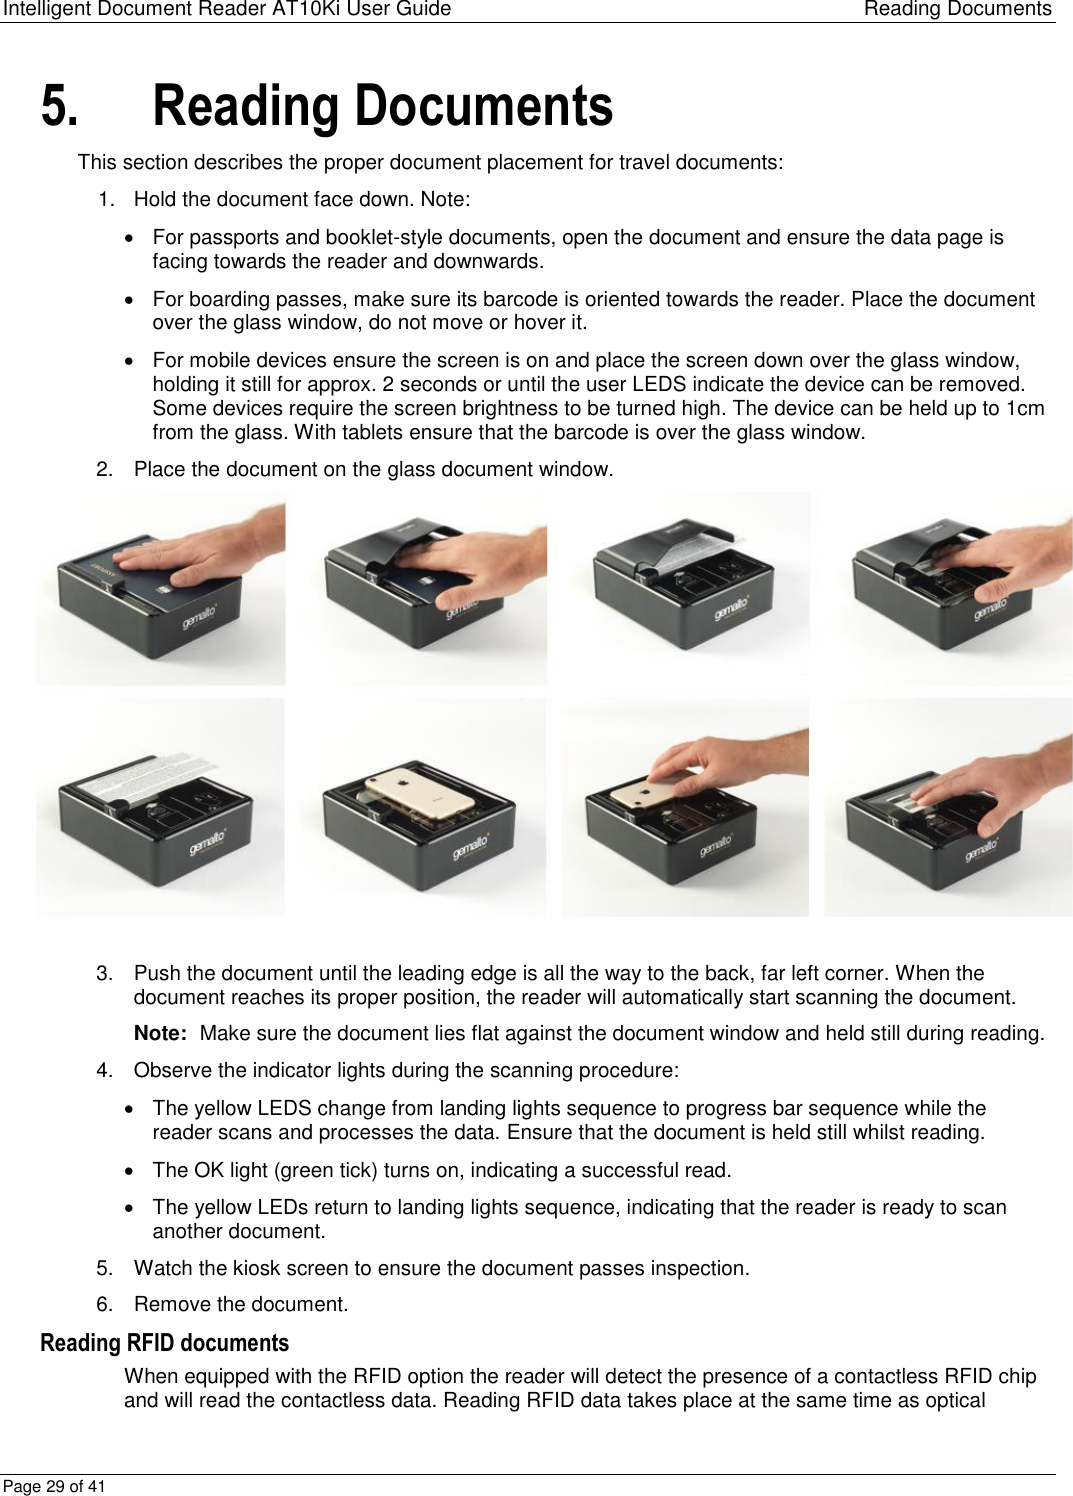 Page 29 of Thales DIS USA PR01523 ation Scanner User Manual